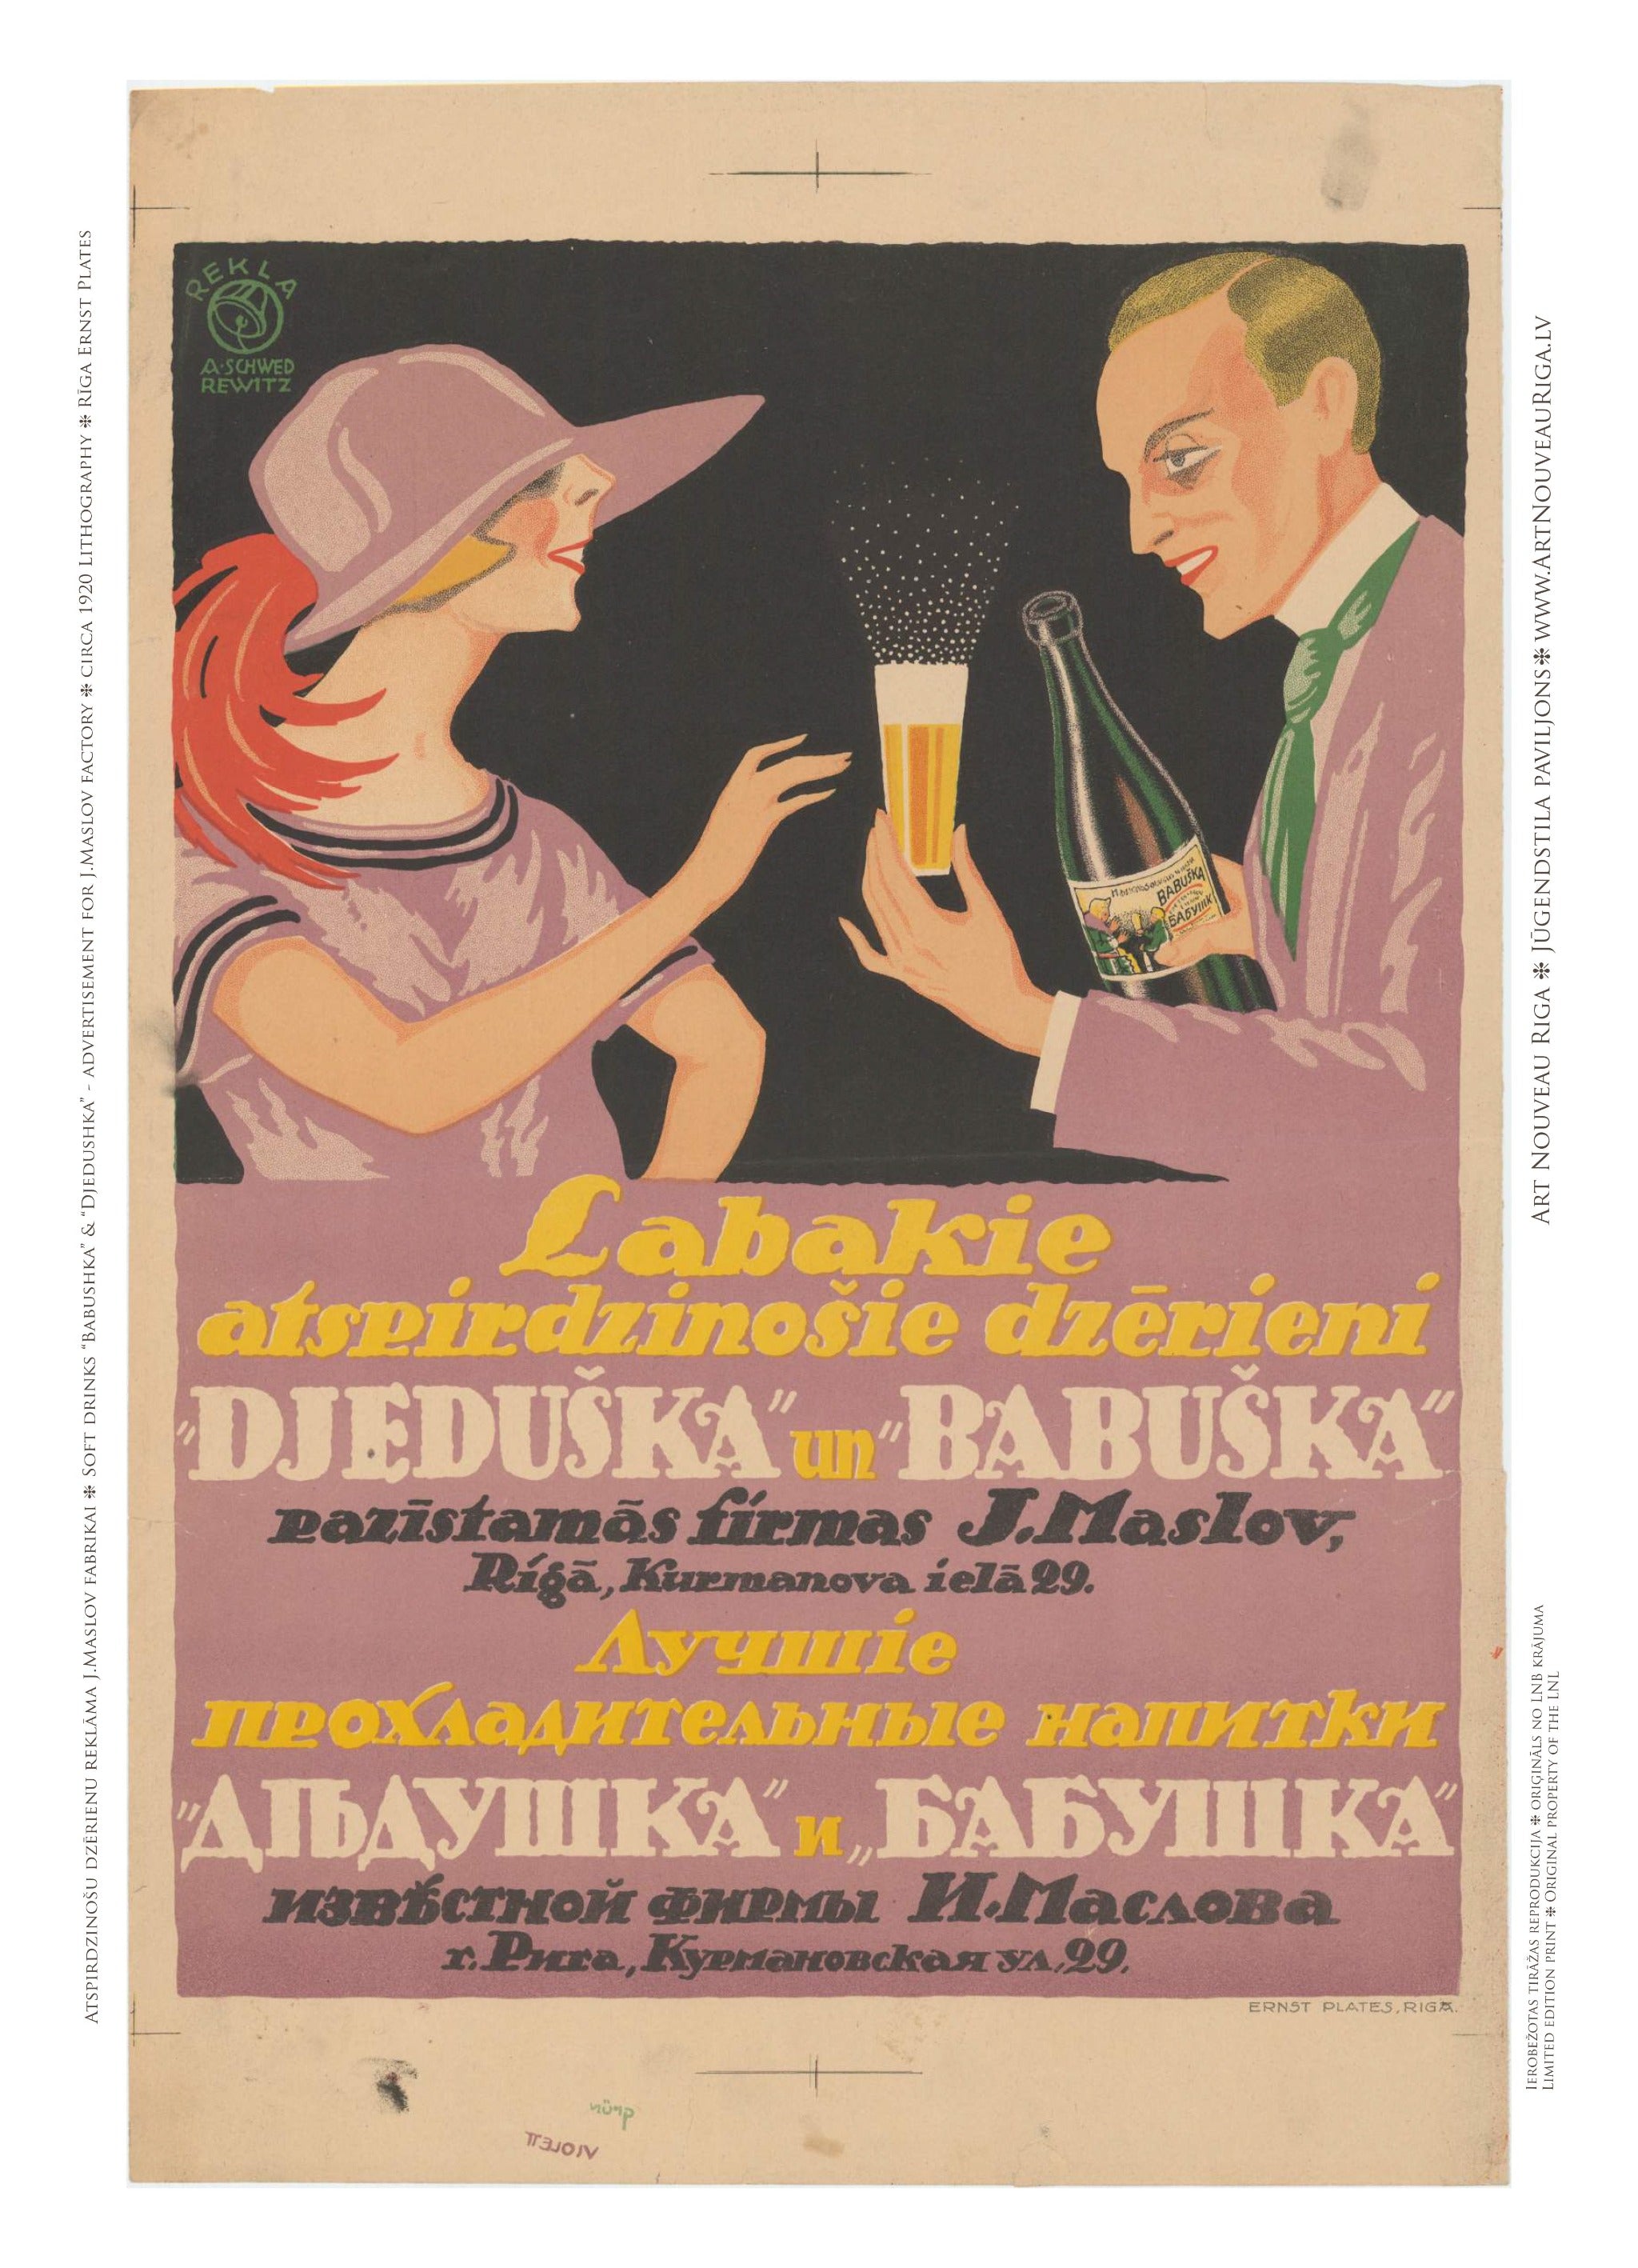 Djedushka & Babushka – Best Soft Drinks in Town